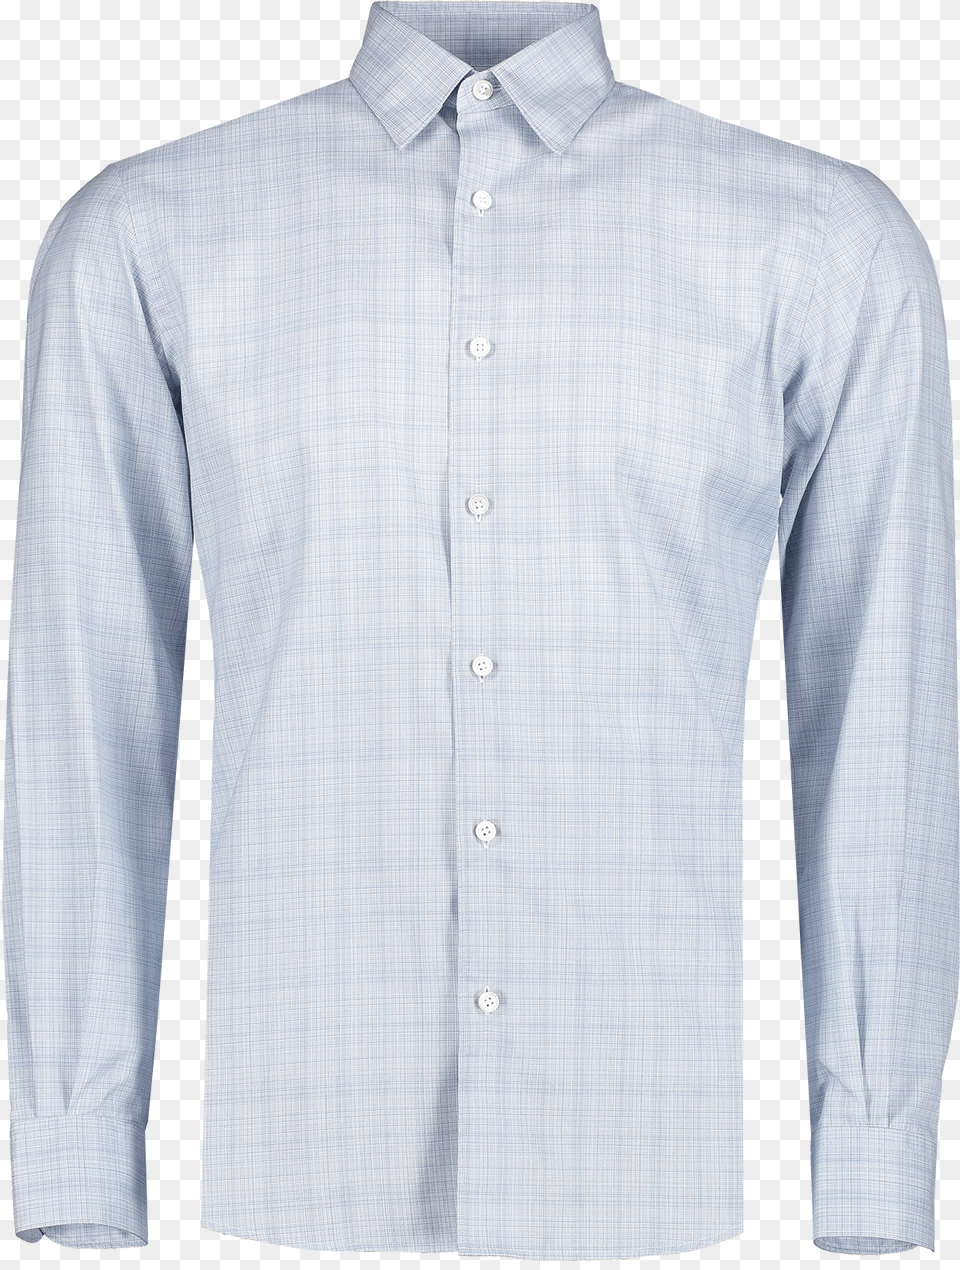 Blue Crosshatch Shirt Long Sleeve, Clothing, Dress Shirt, Long Sleeve Png